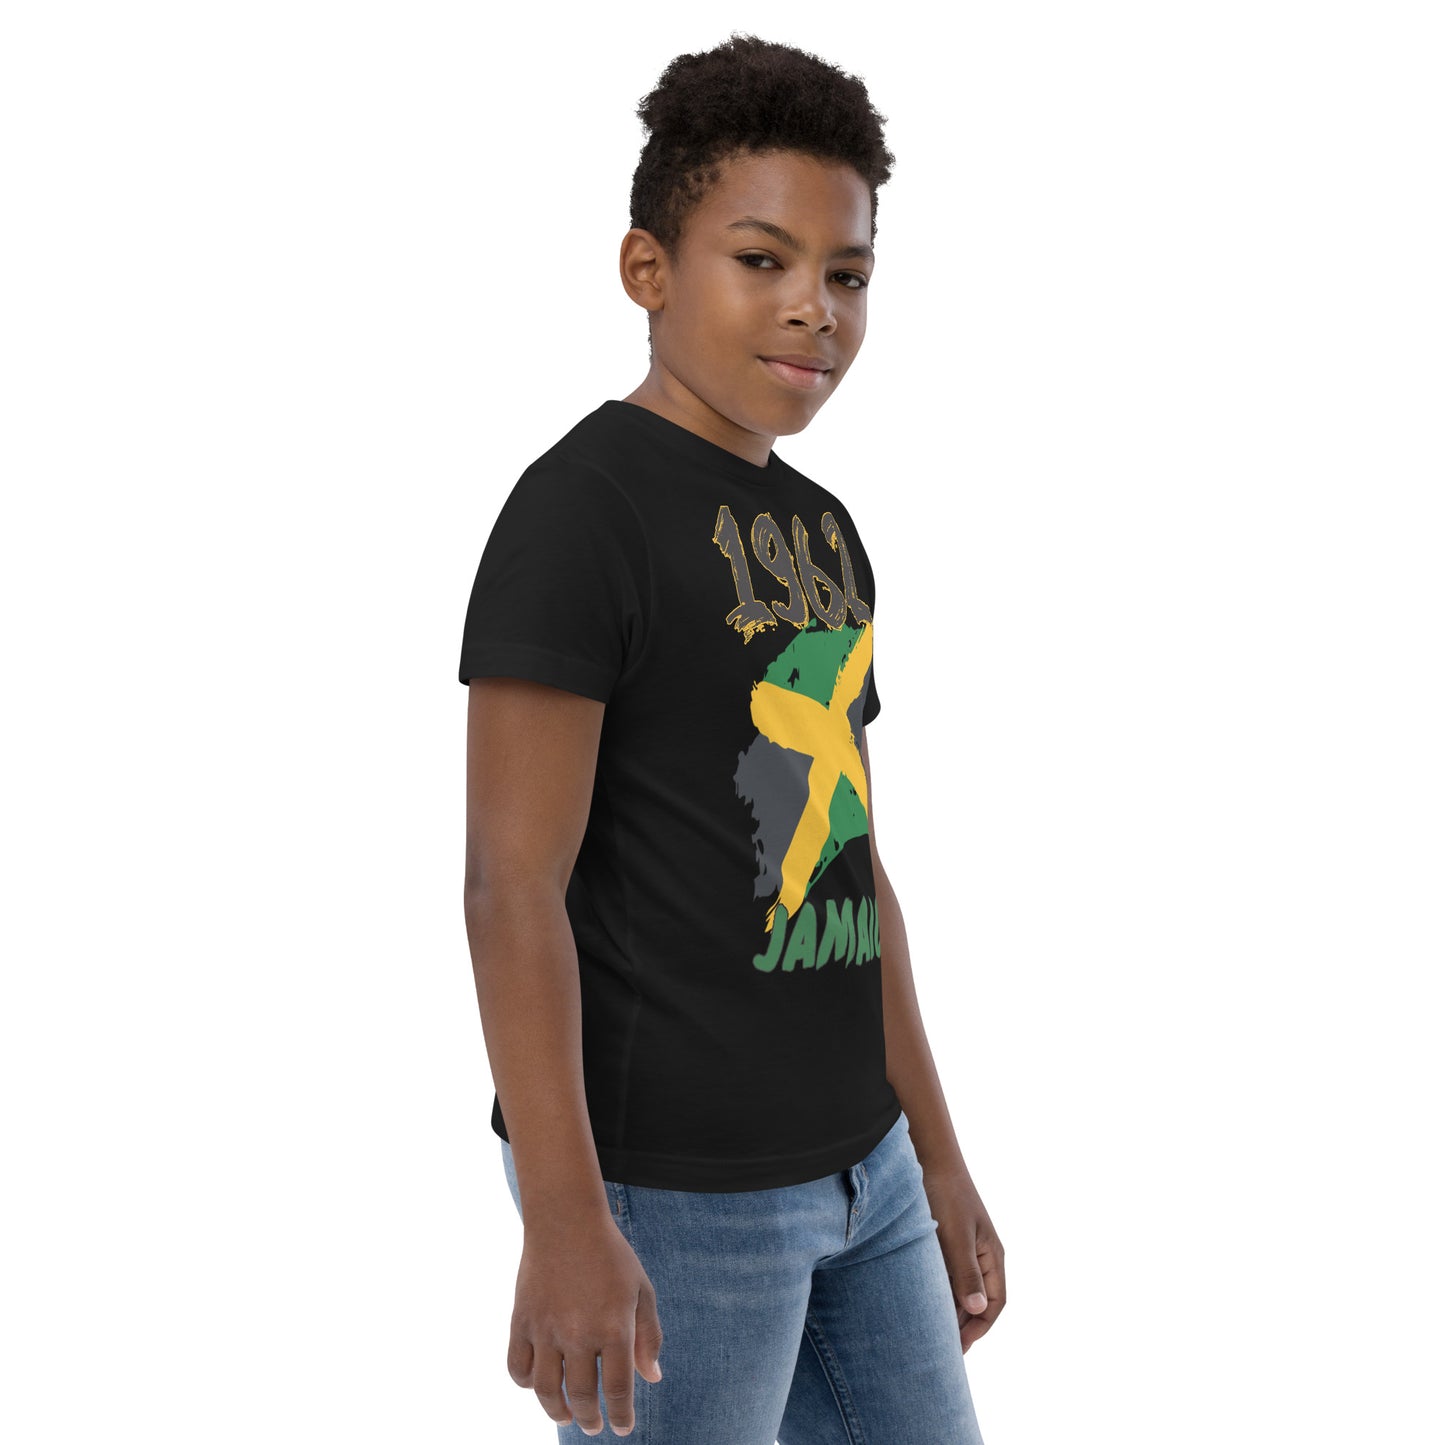 Youth Jamaica 1962 Independence Shirt